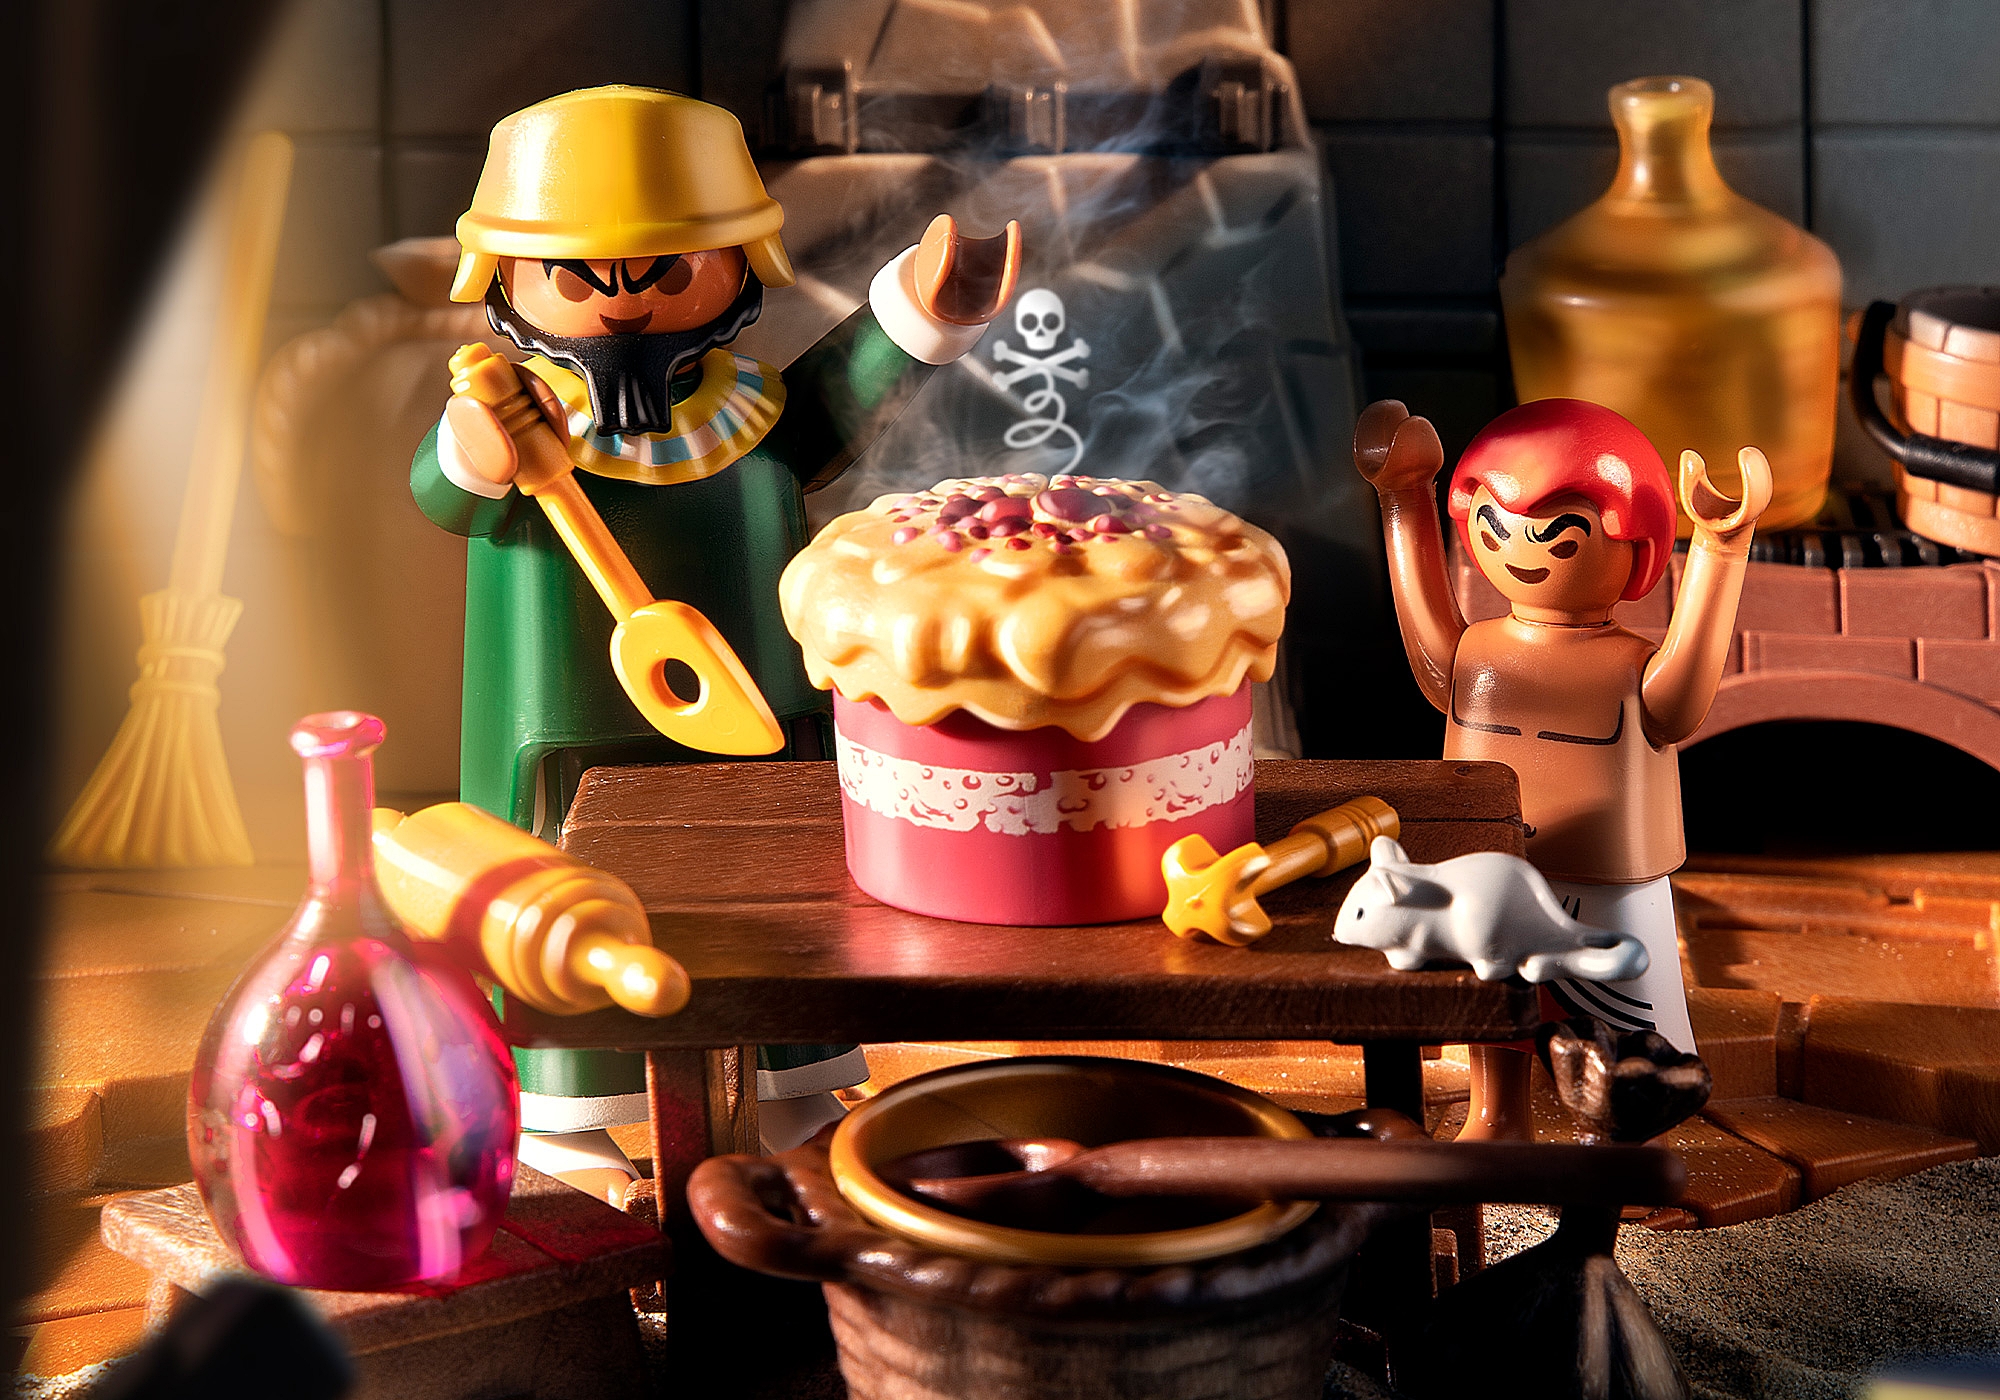 Playmobil Asterix - Criminals poisoned Cake - 24-Parts - 71269